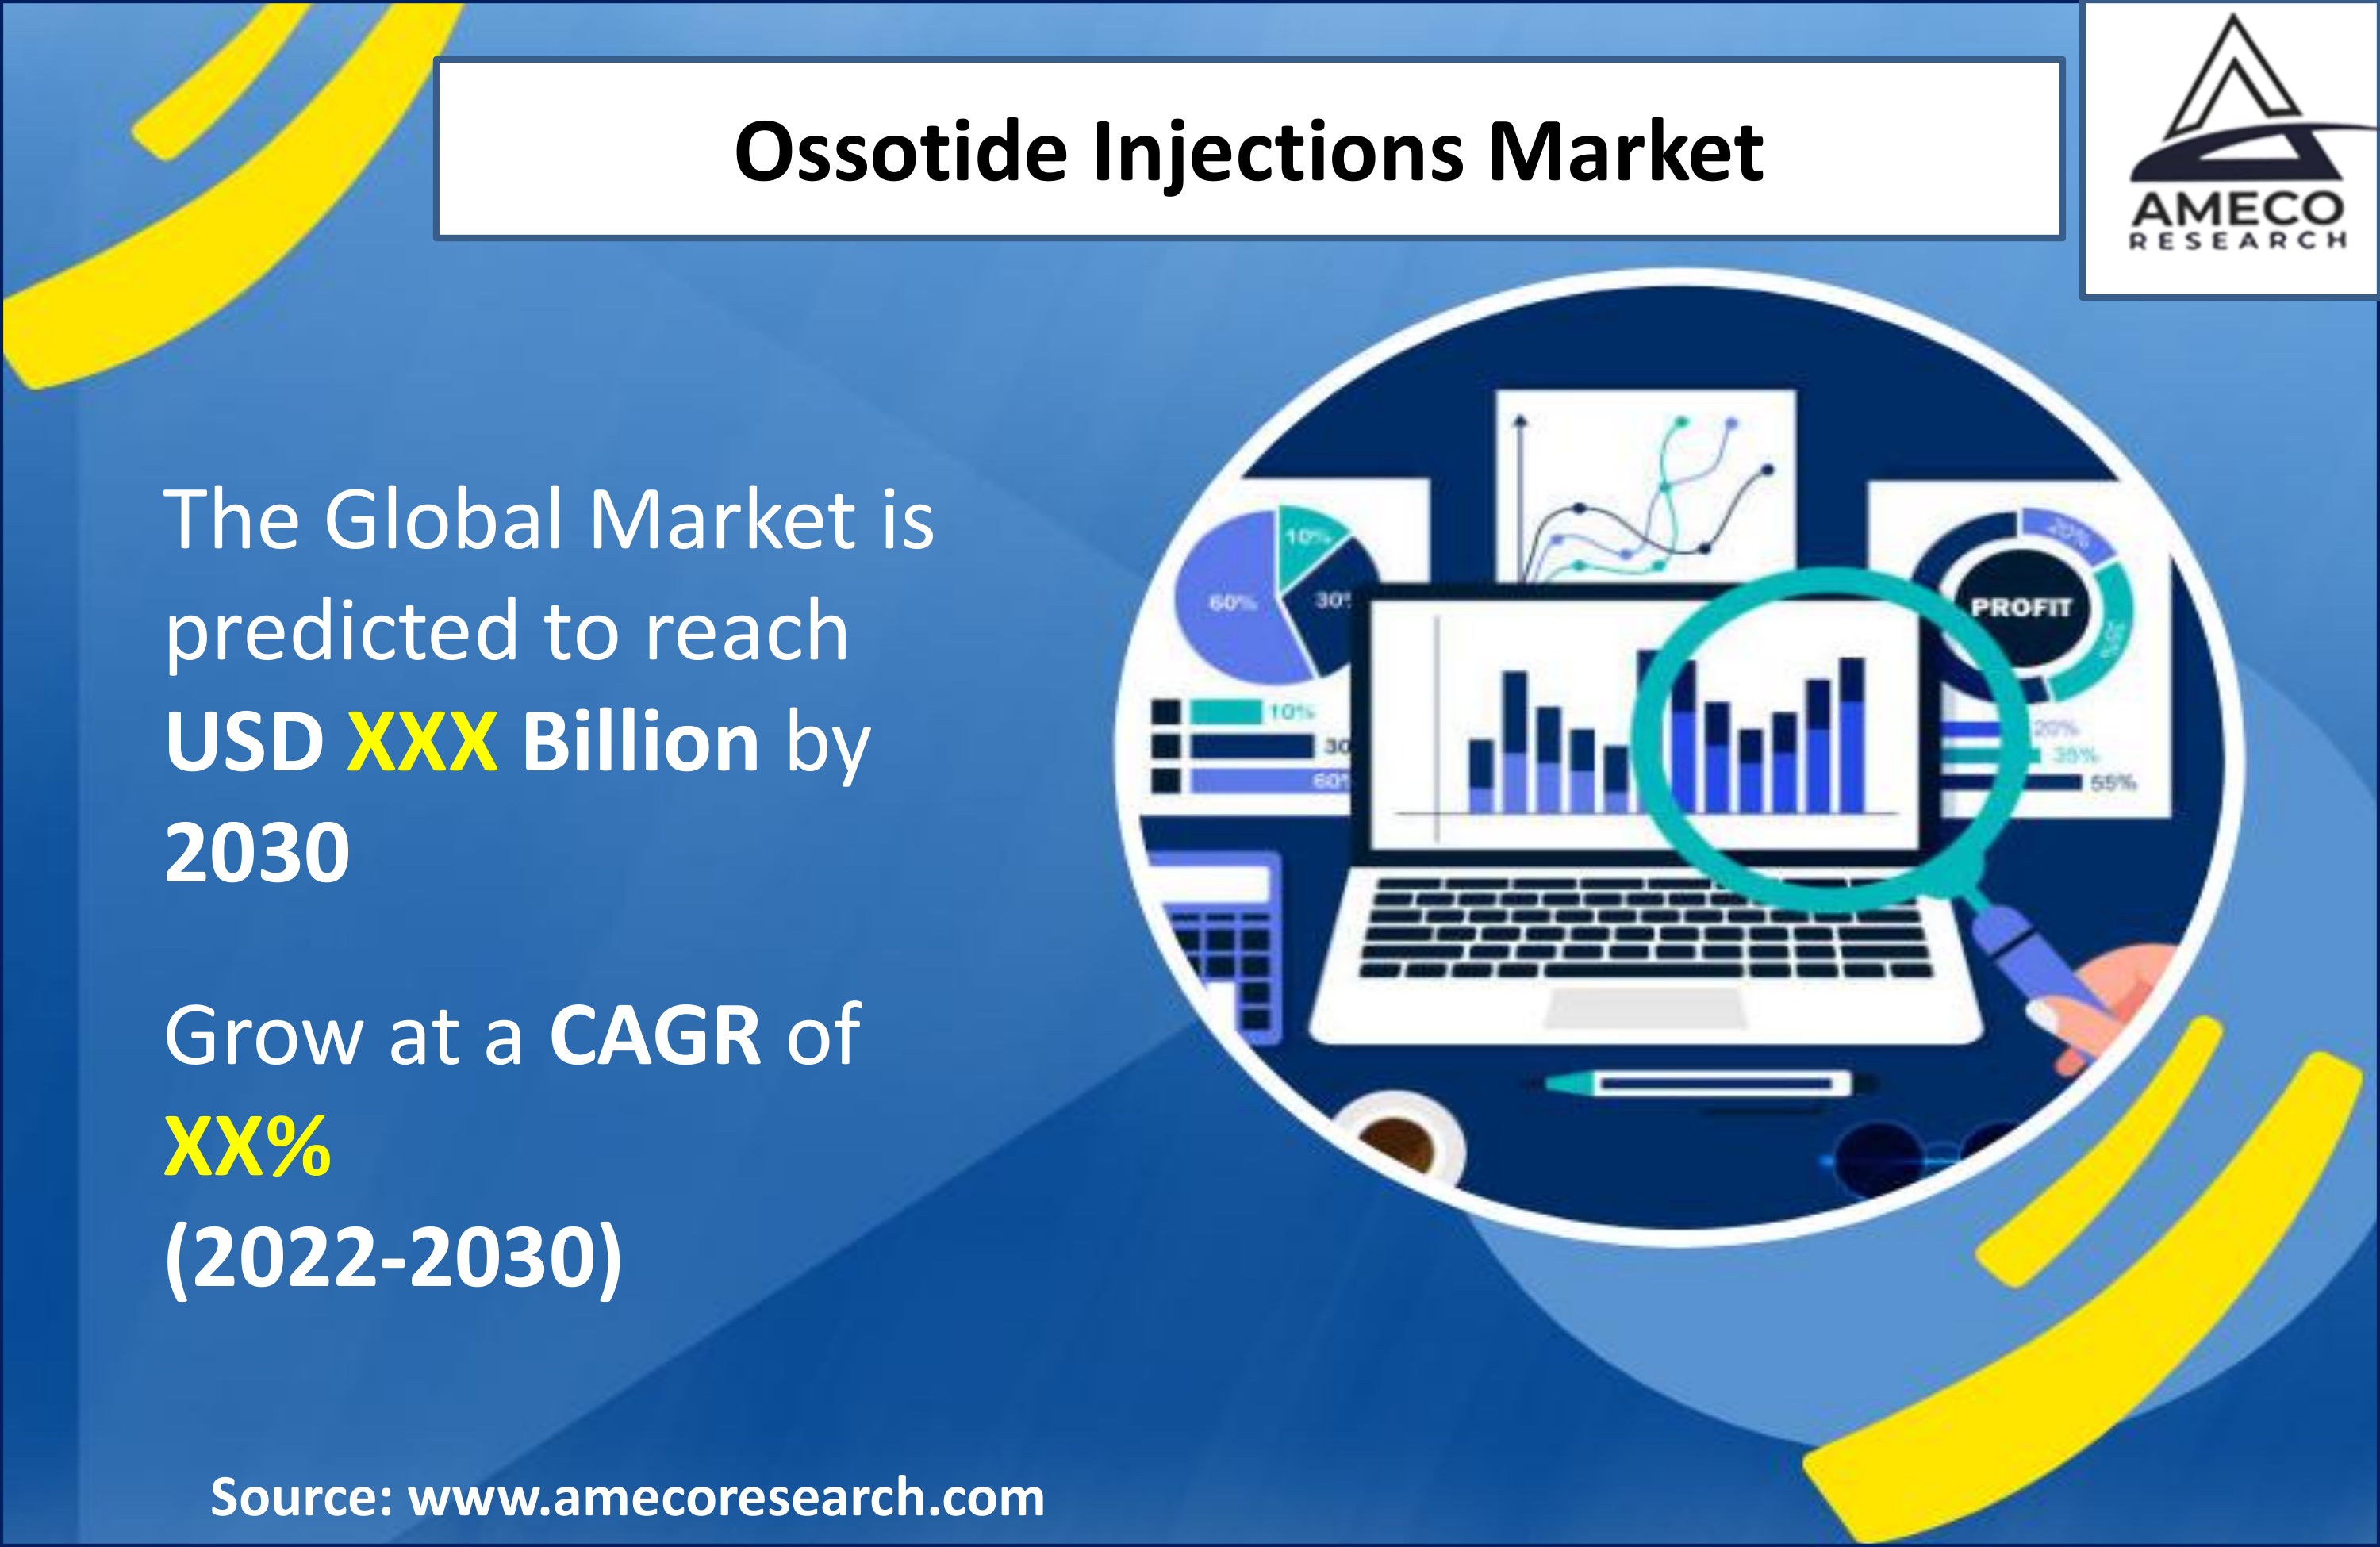 Ossotide Injections Market